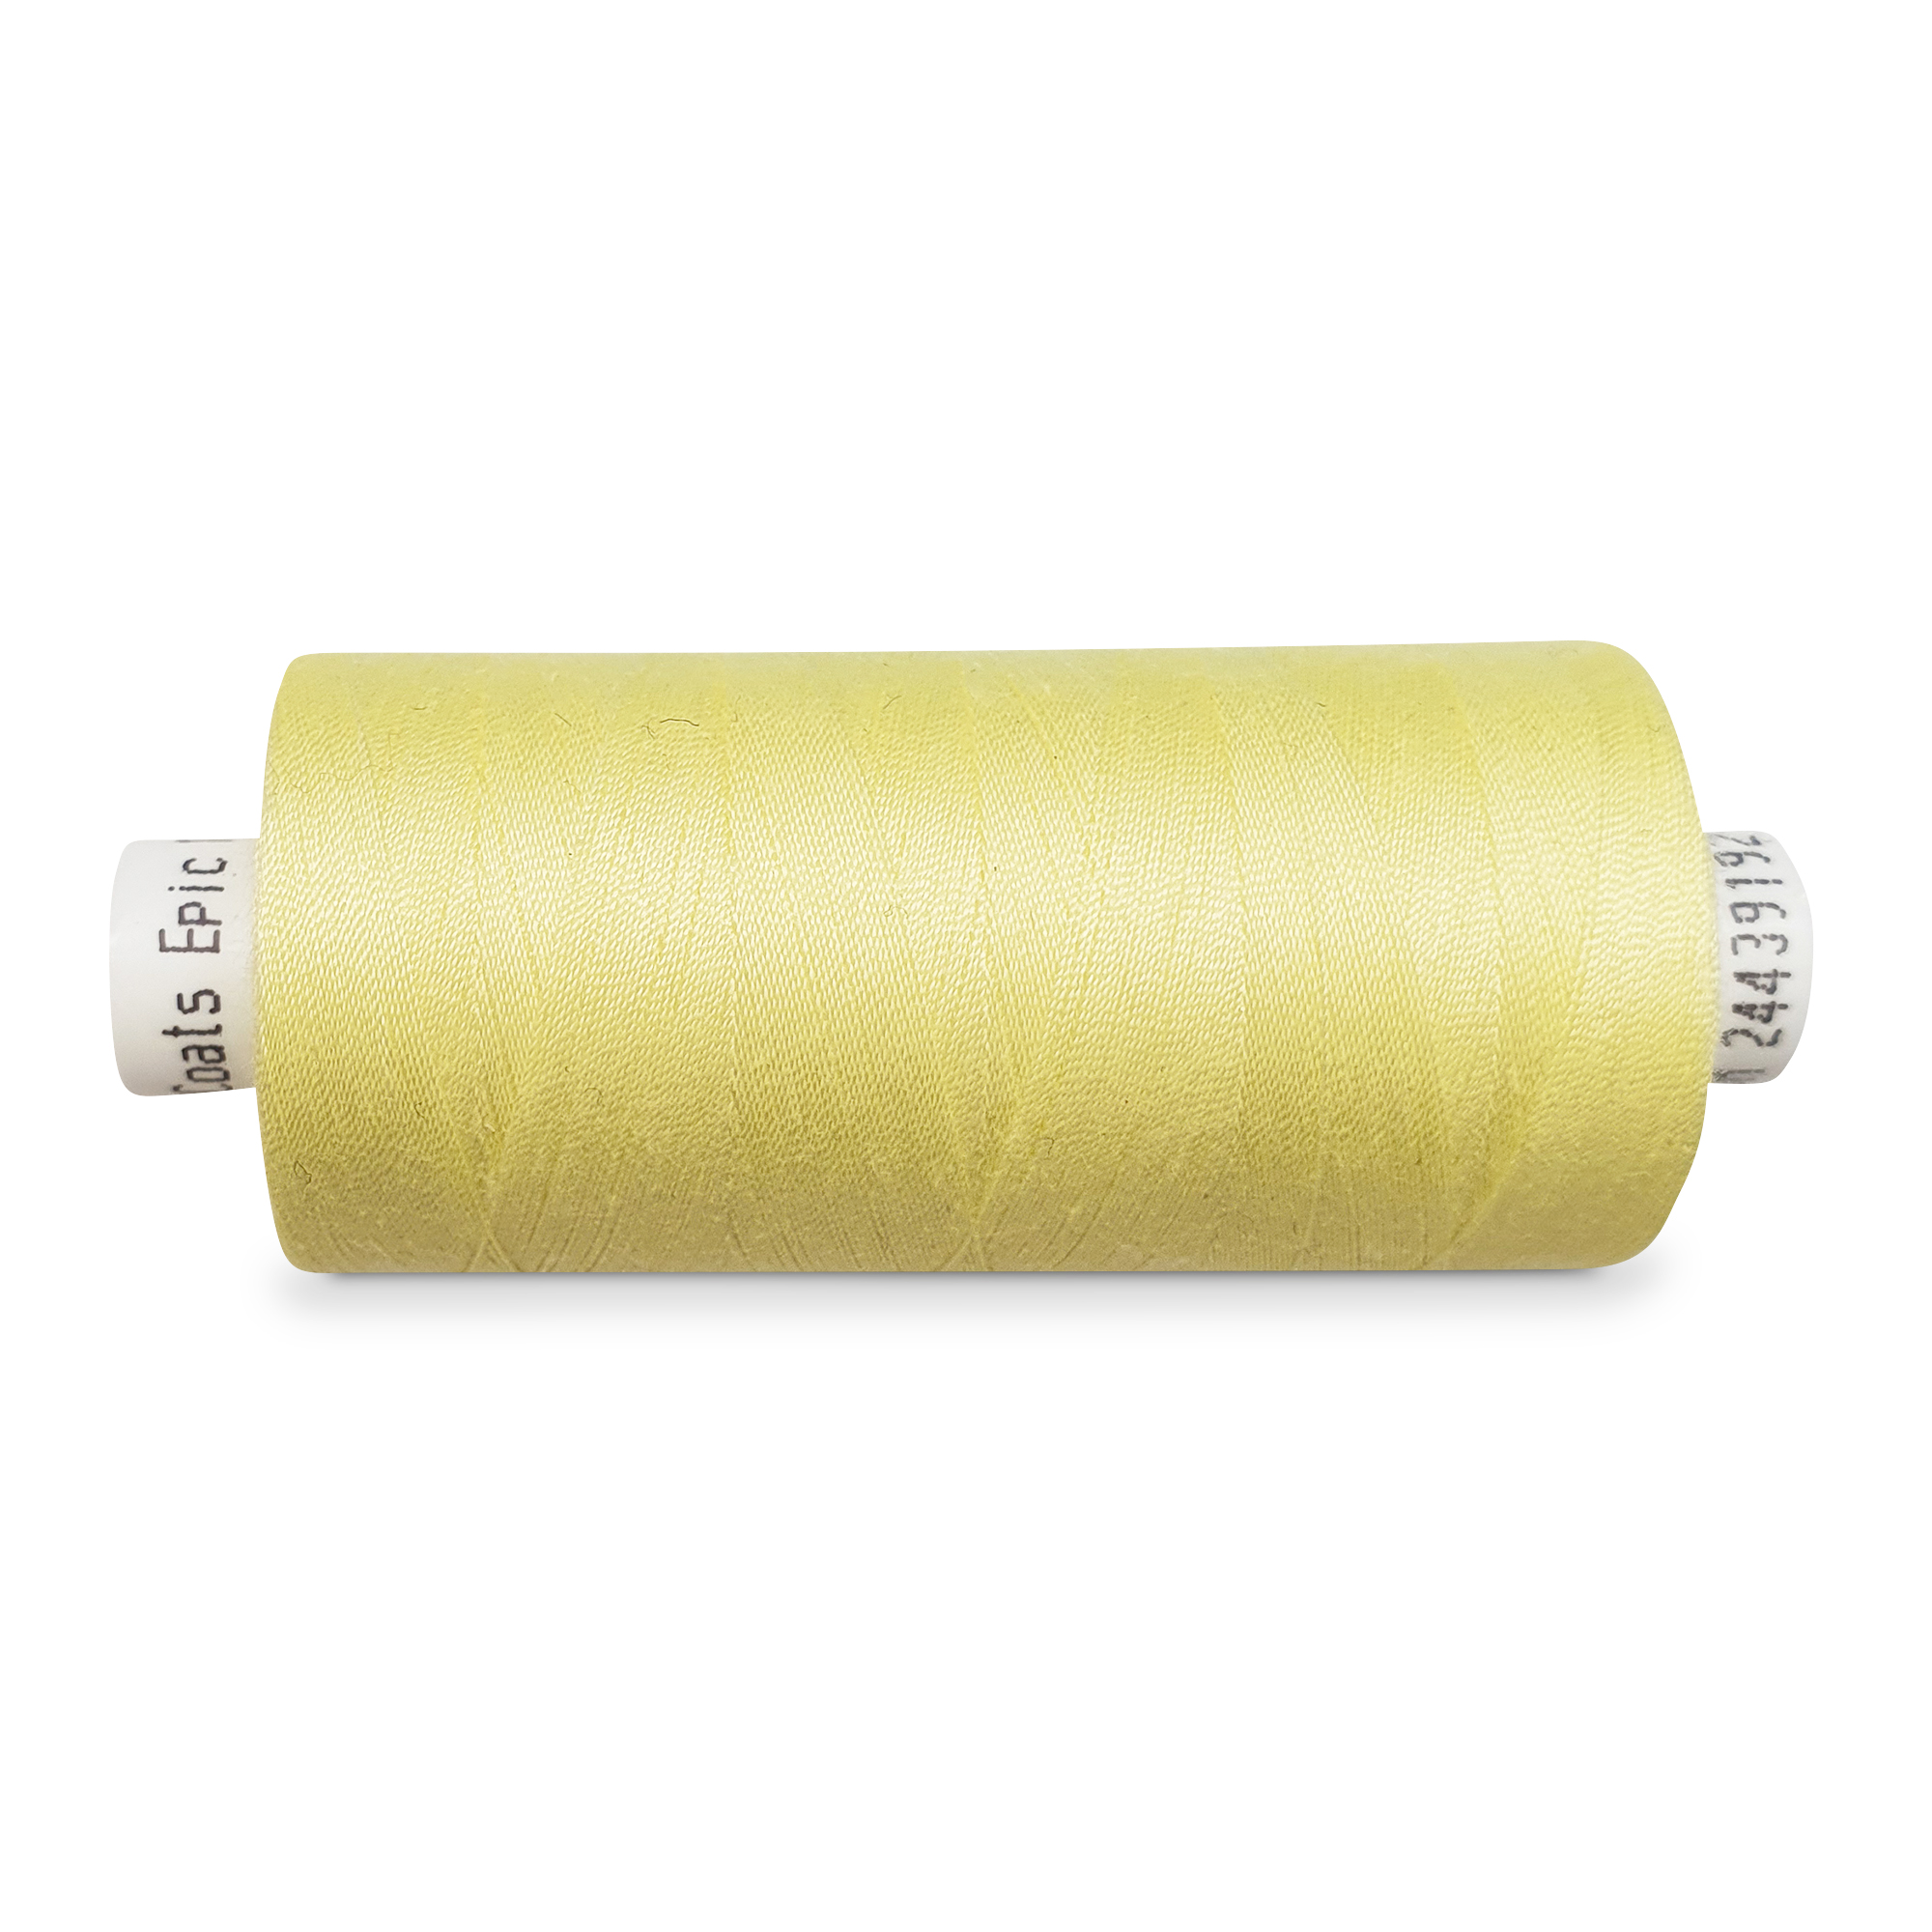 Sewing thread citrine